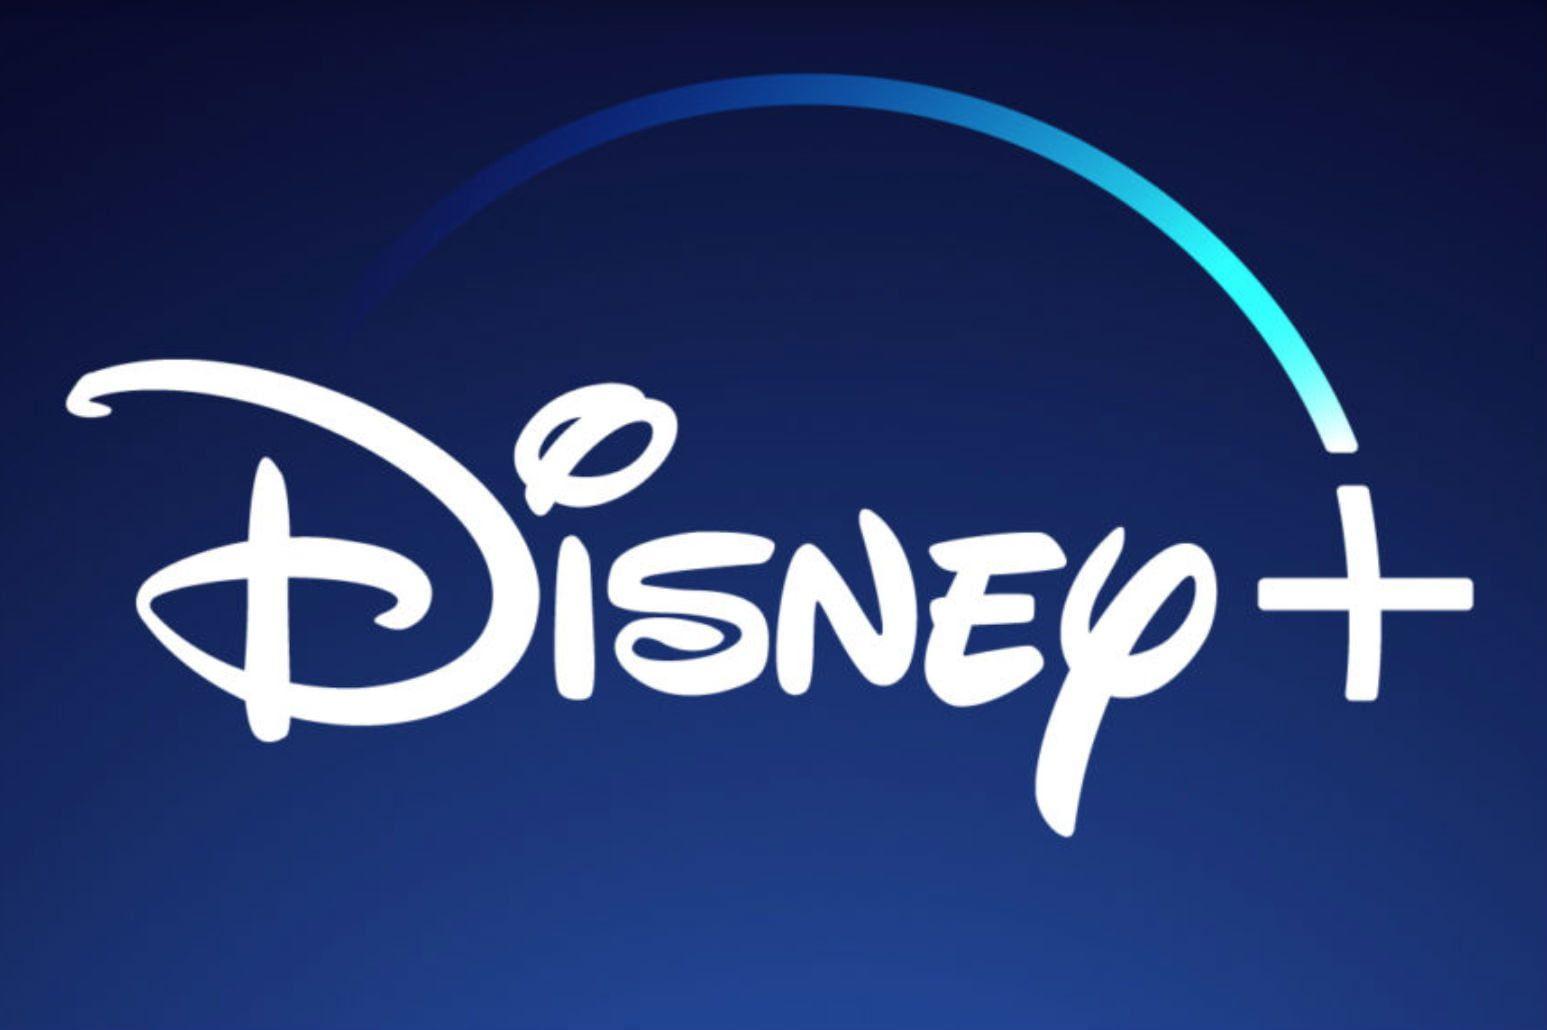 Disney Online Logo - Disney Plus: Everything We Know About Disney's Streaming Service ...